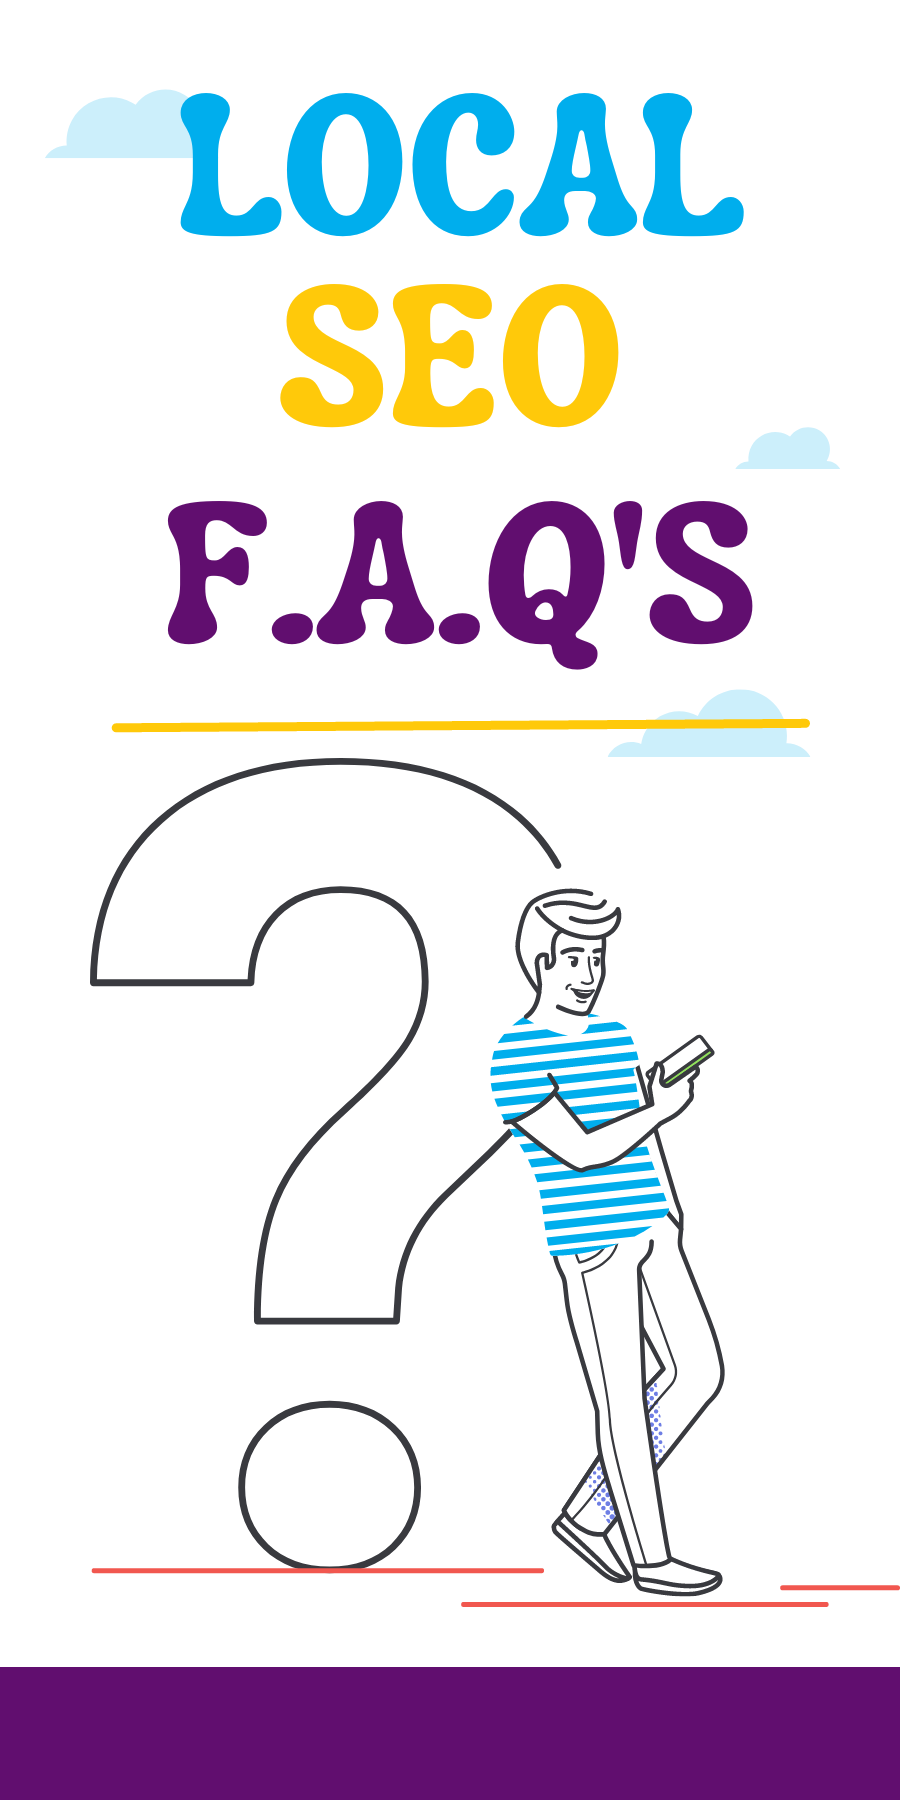 FAQ's around Local SEO Ranking Factors